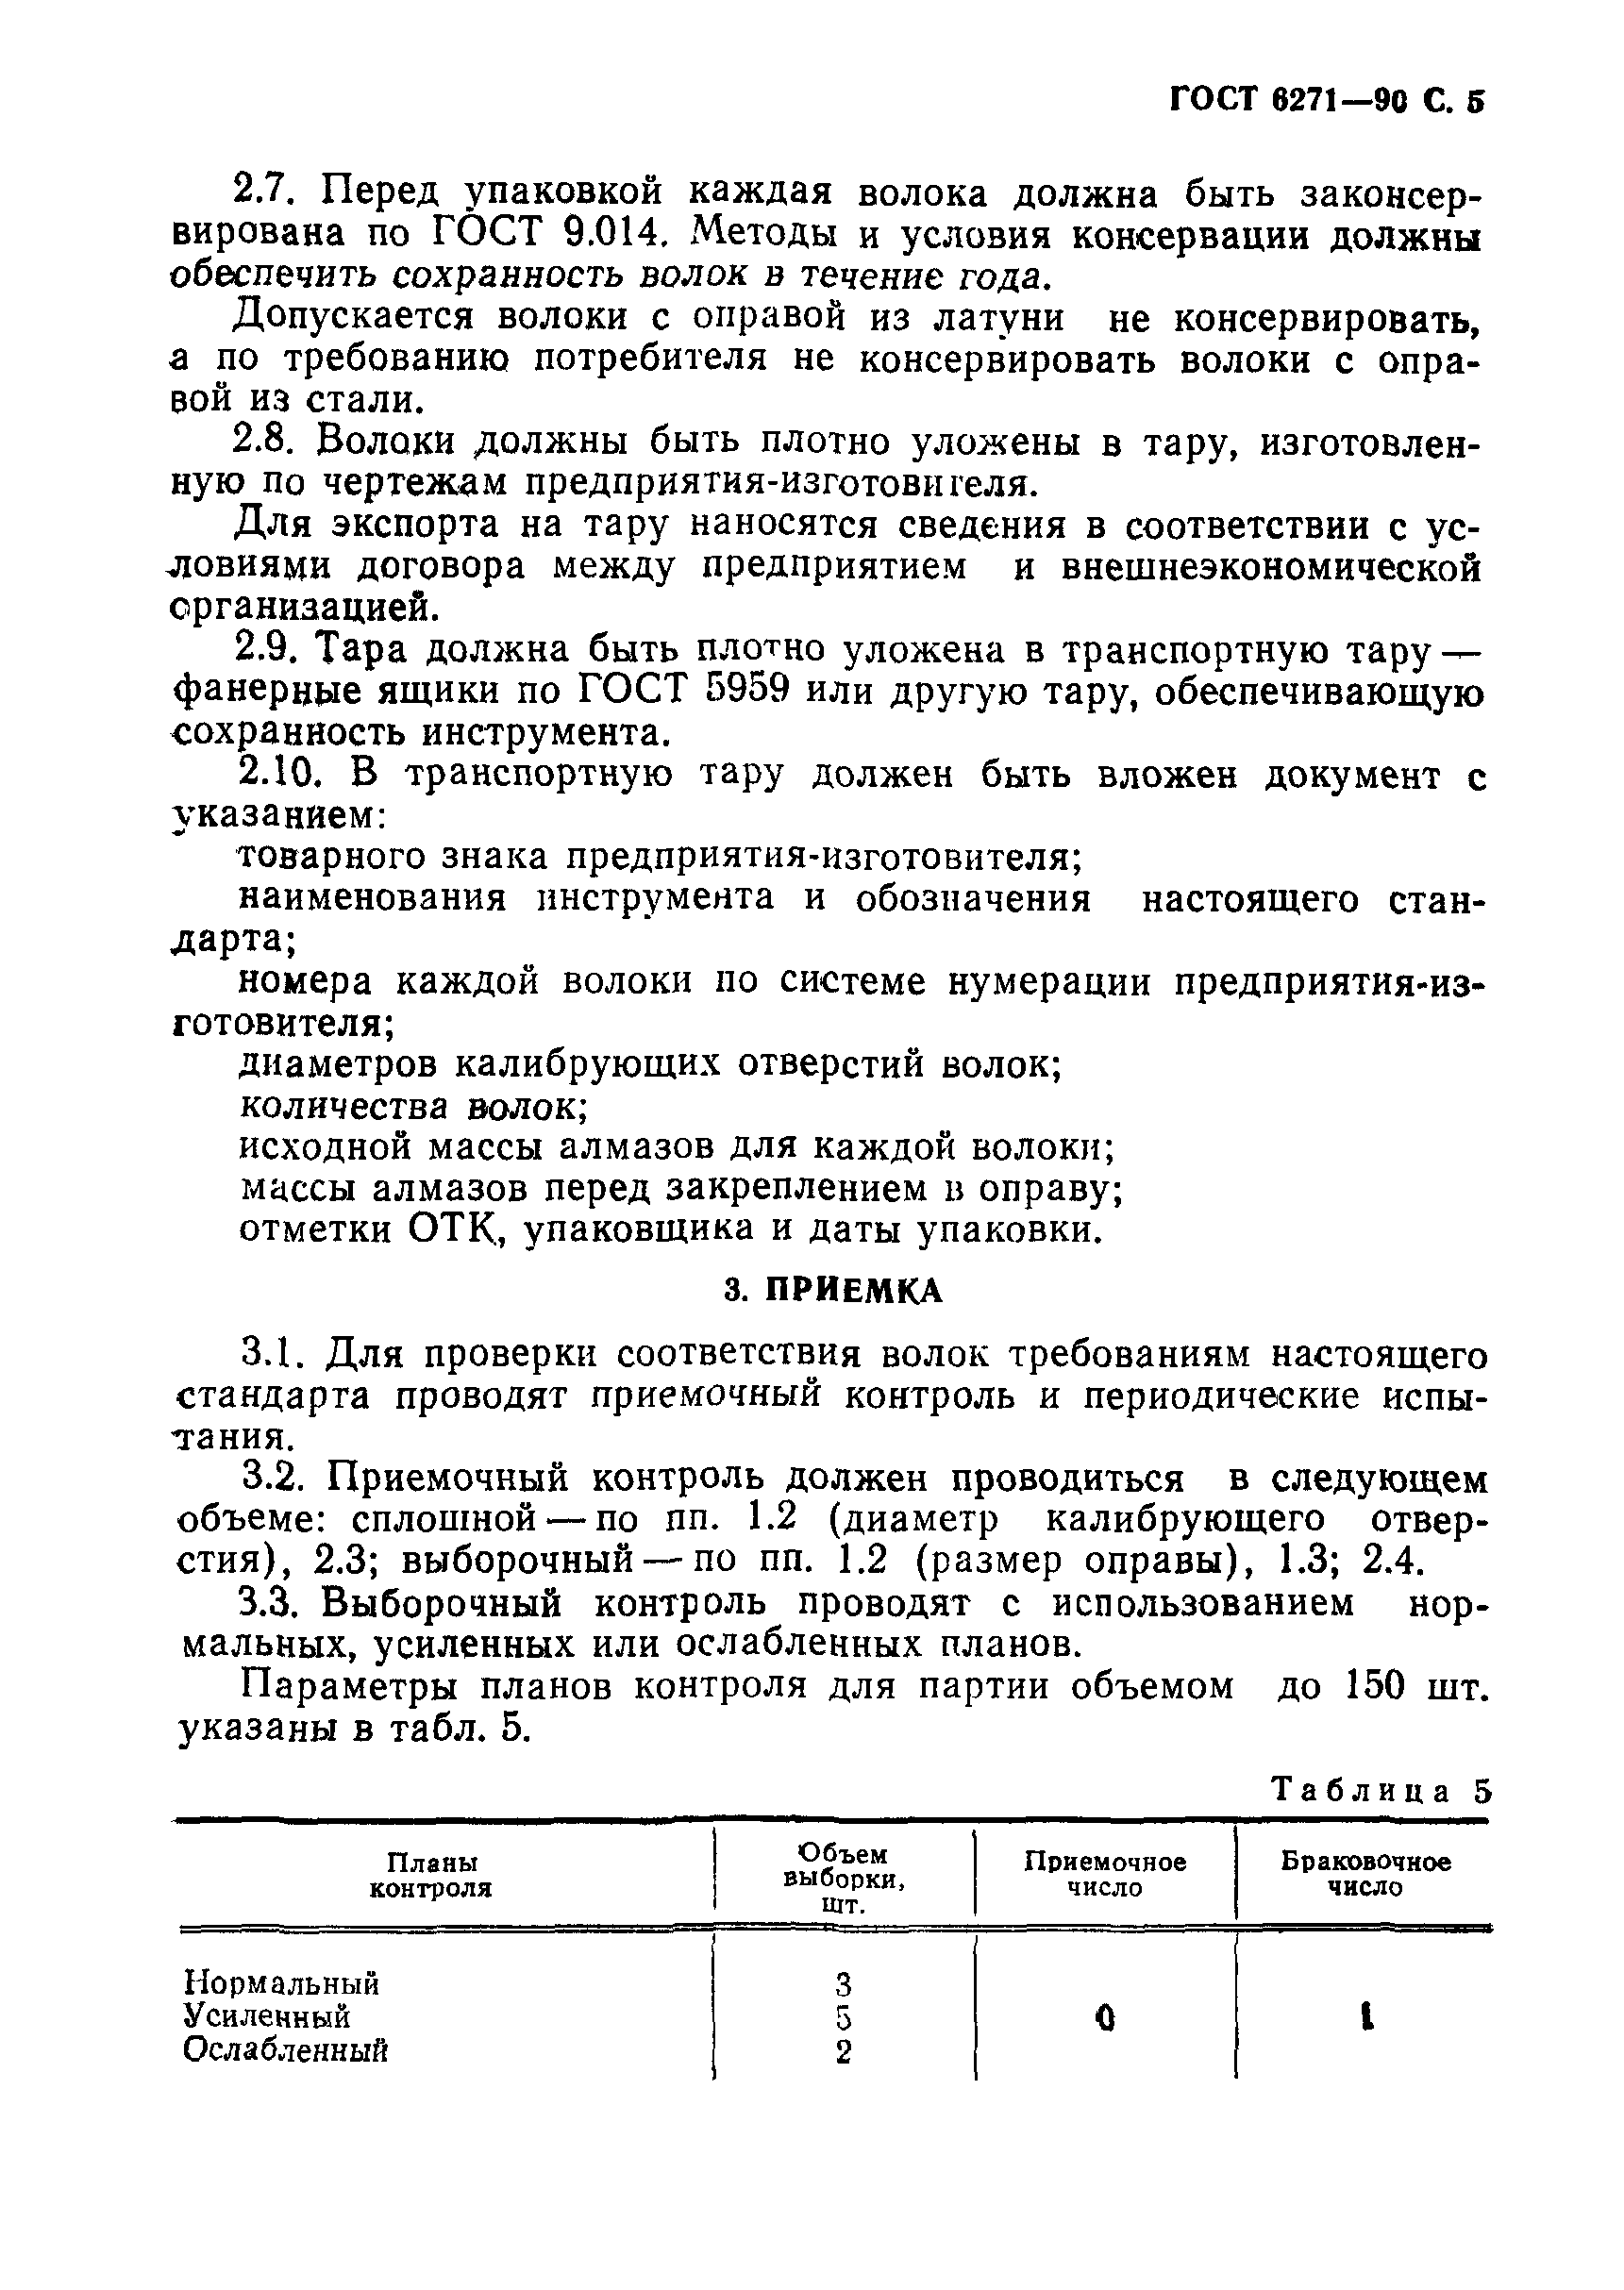 ГОСТ 6271-90